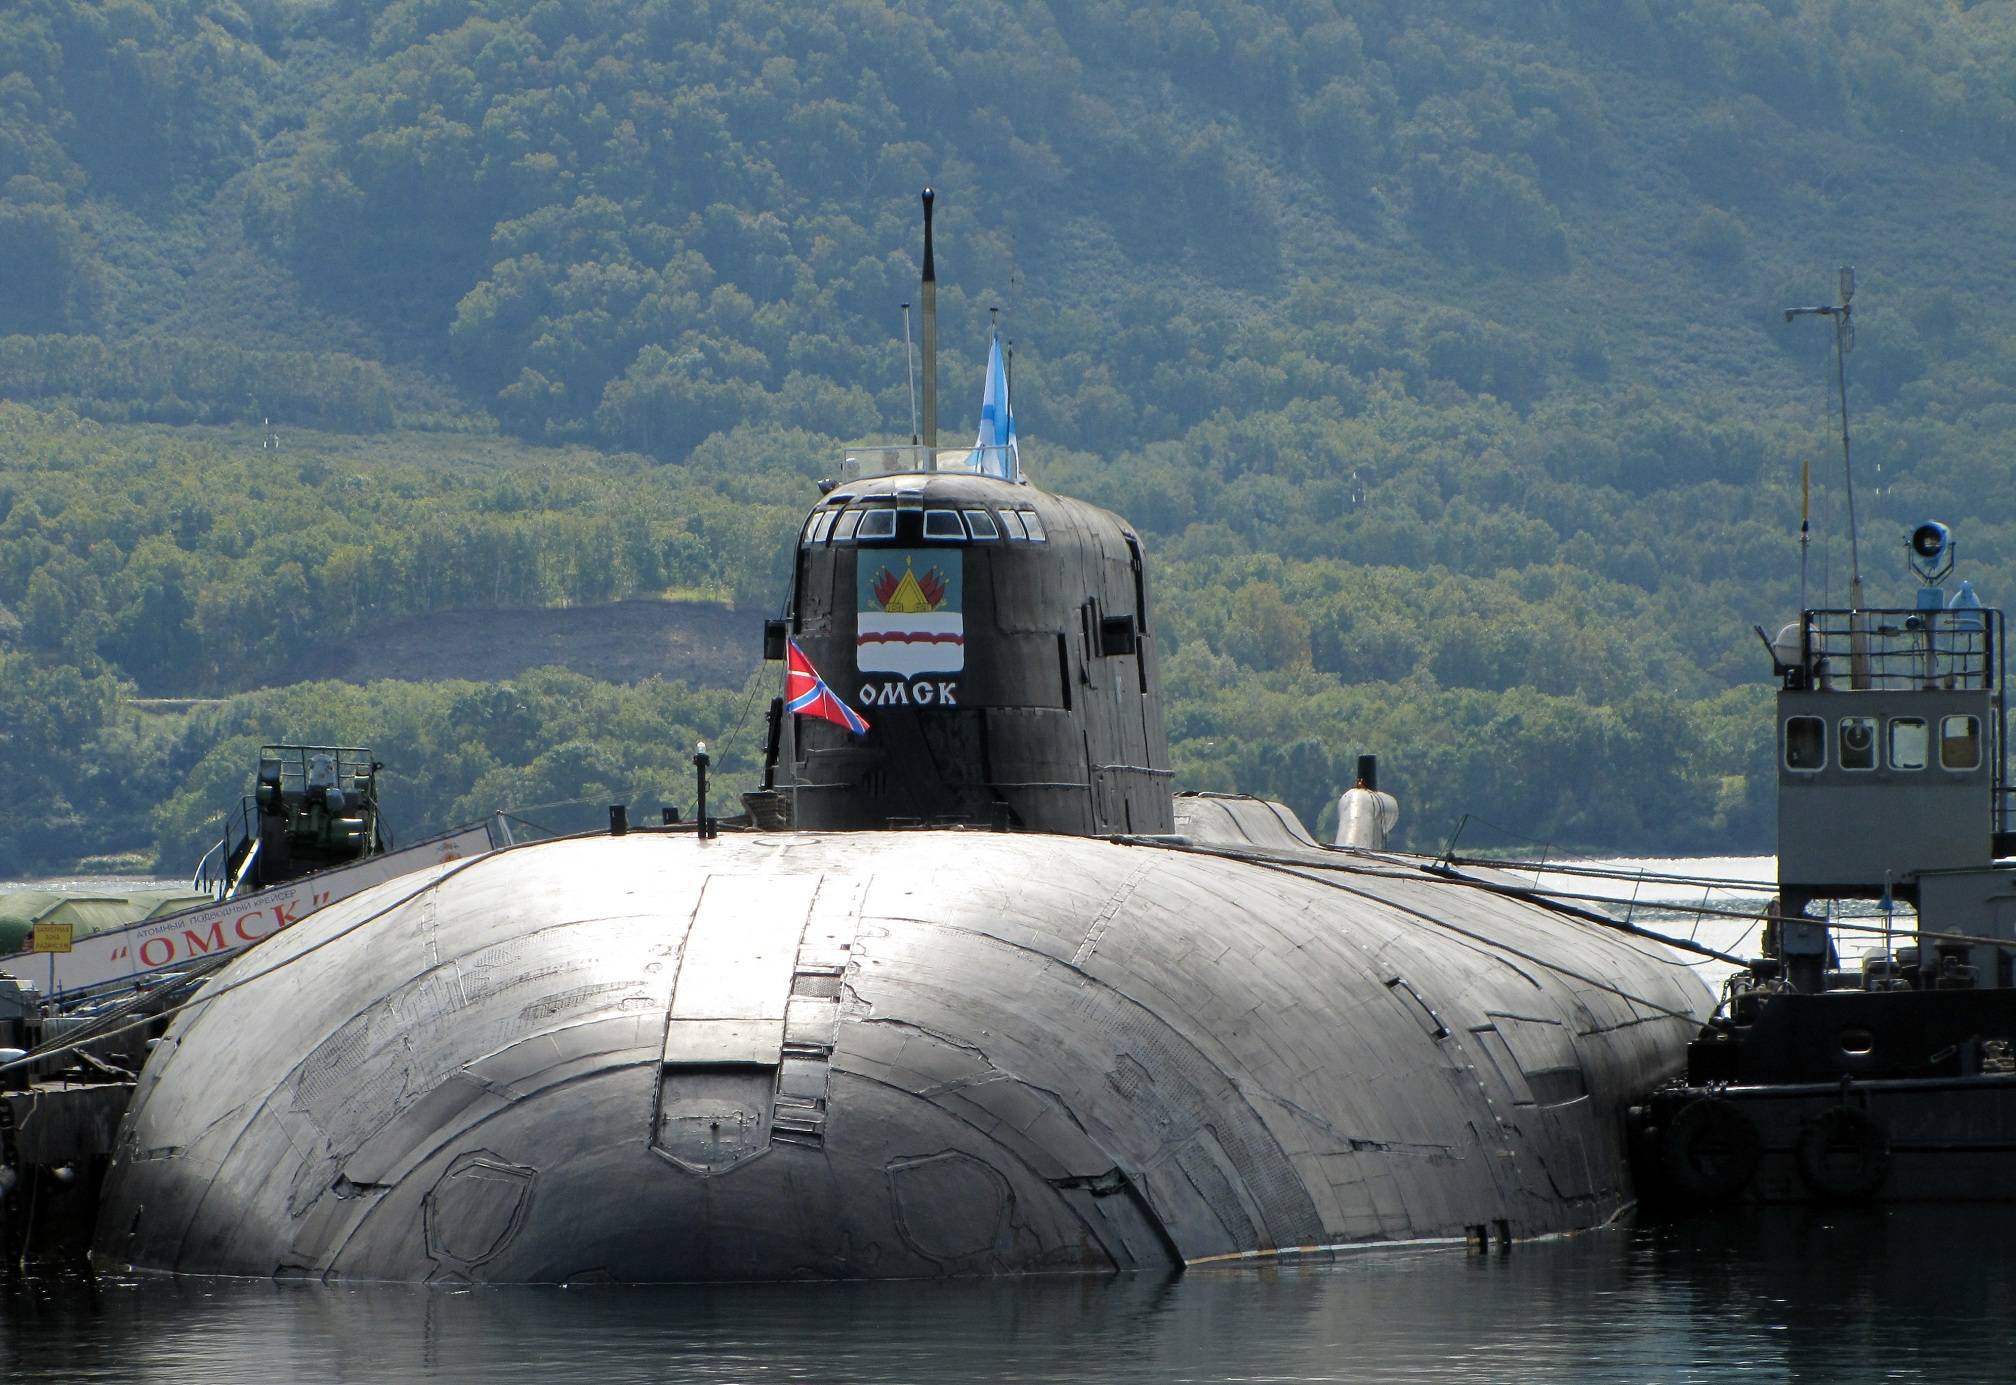 Пл c. Лодки 949а Антей. Пр. 949а Антей. Подводные лодки проекта 949а «Антей» Курск. Подводная лодка Омск проекта 949а.